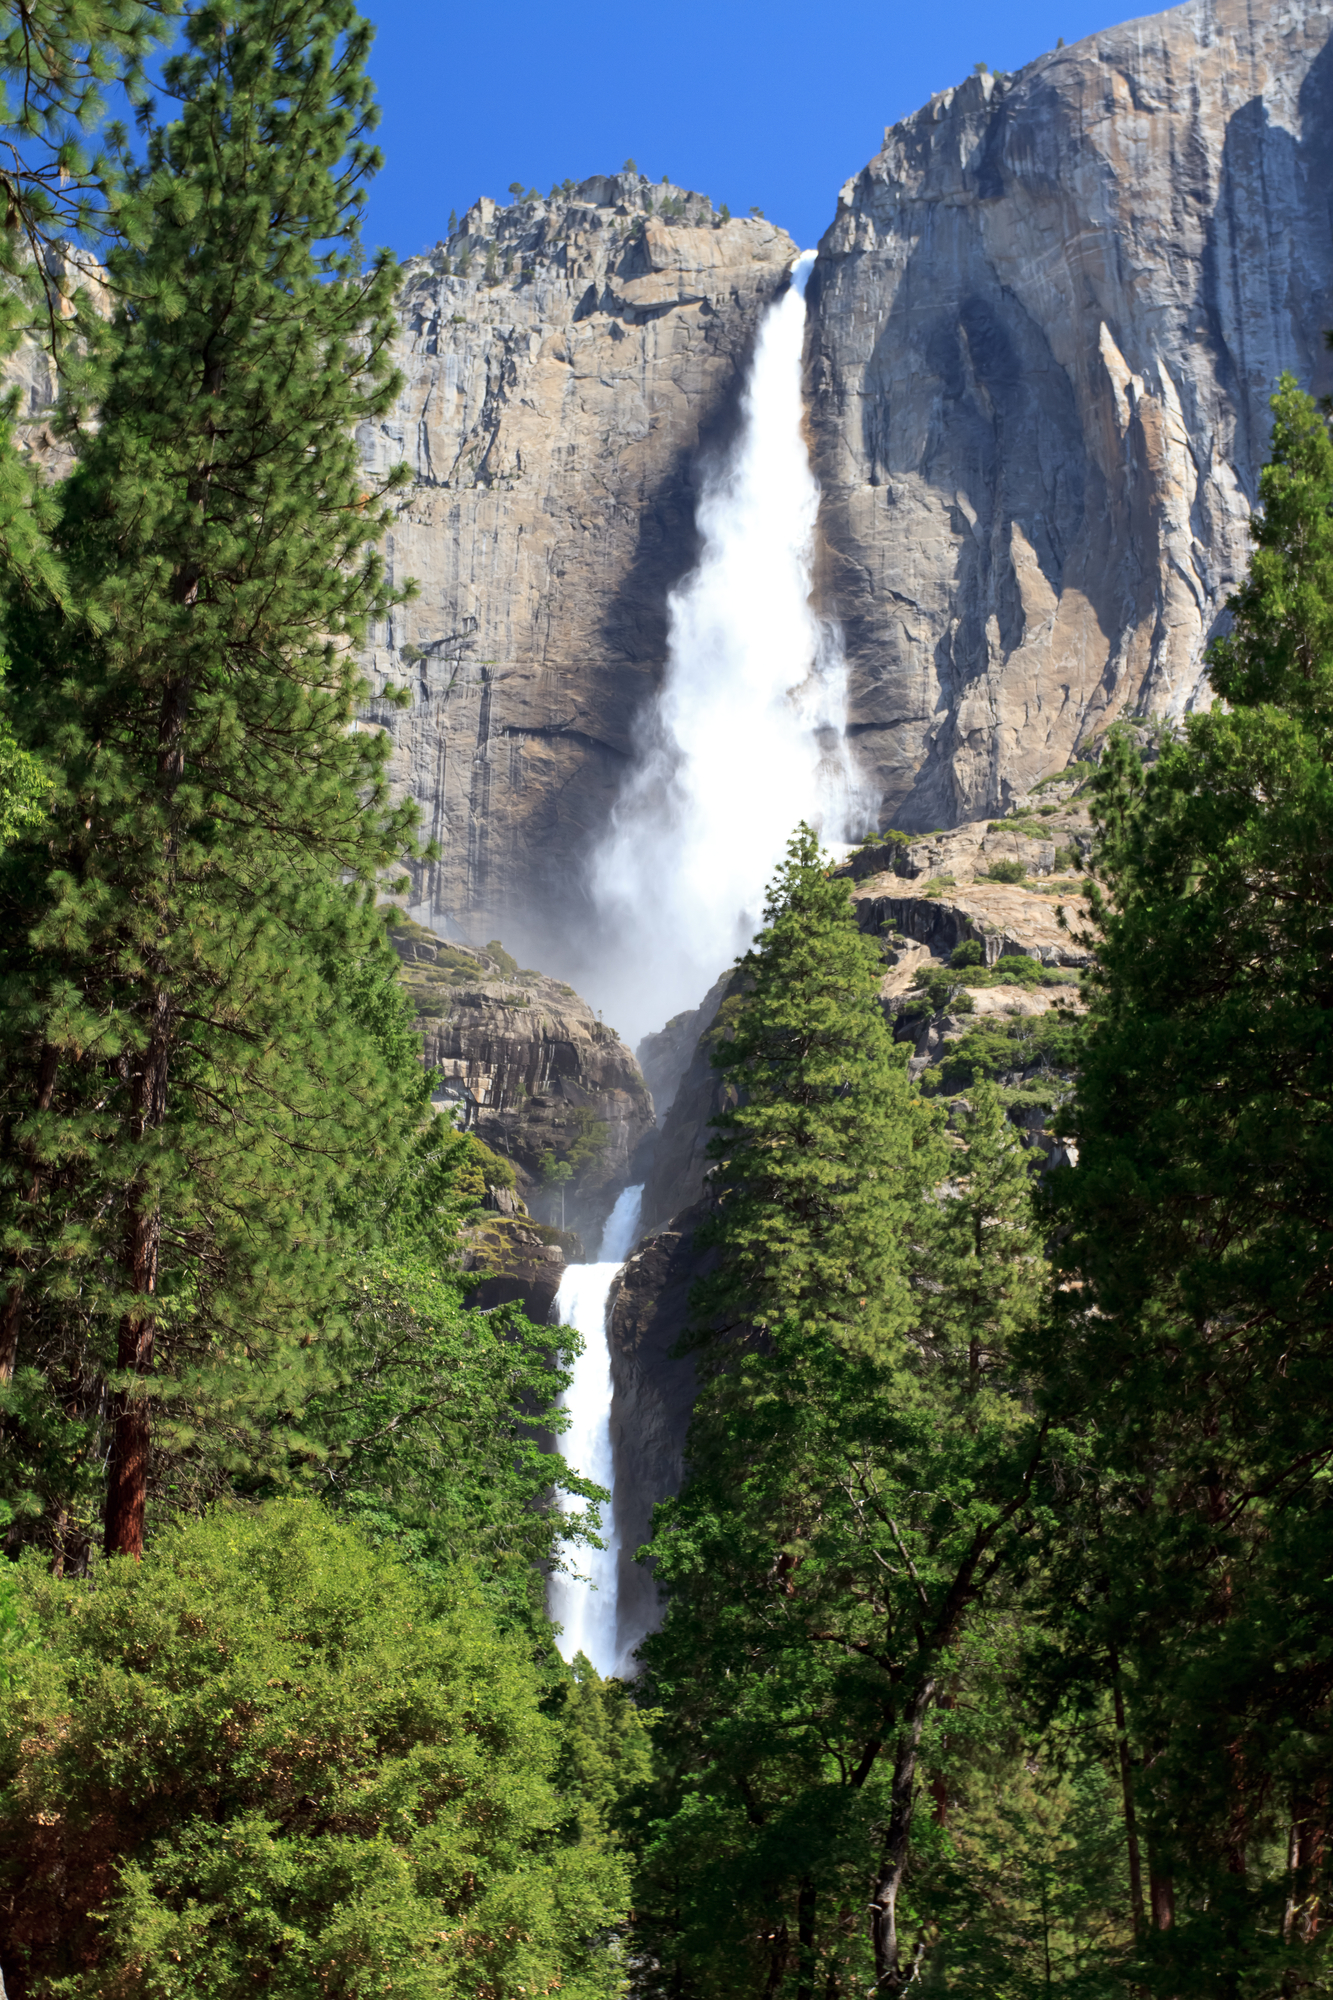 Upper and lower Yosemite Falls